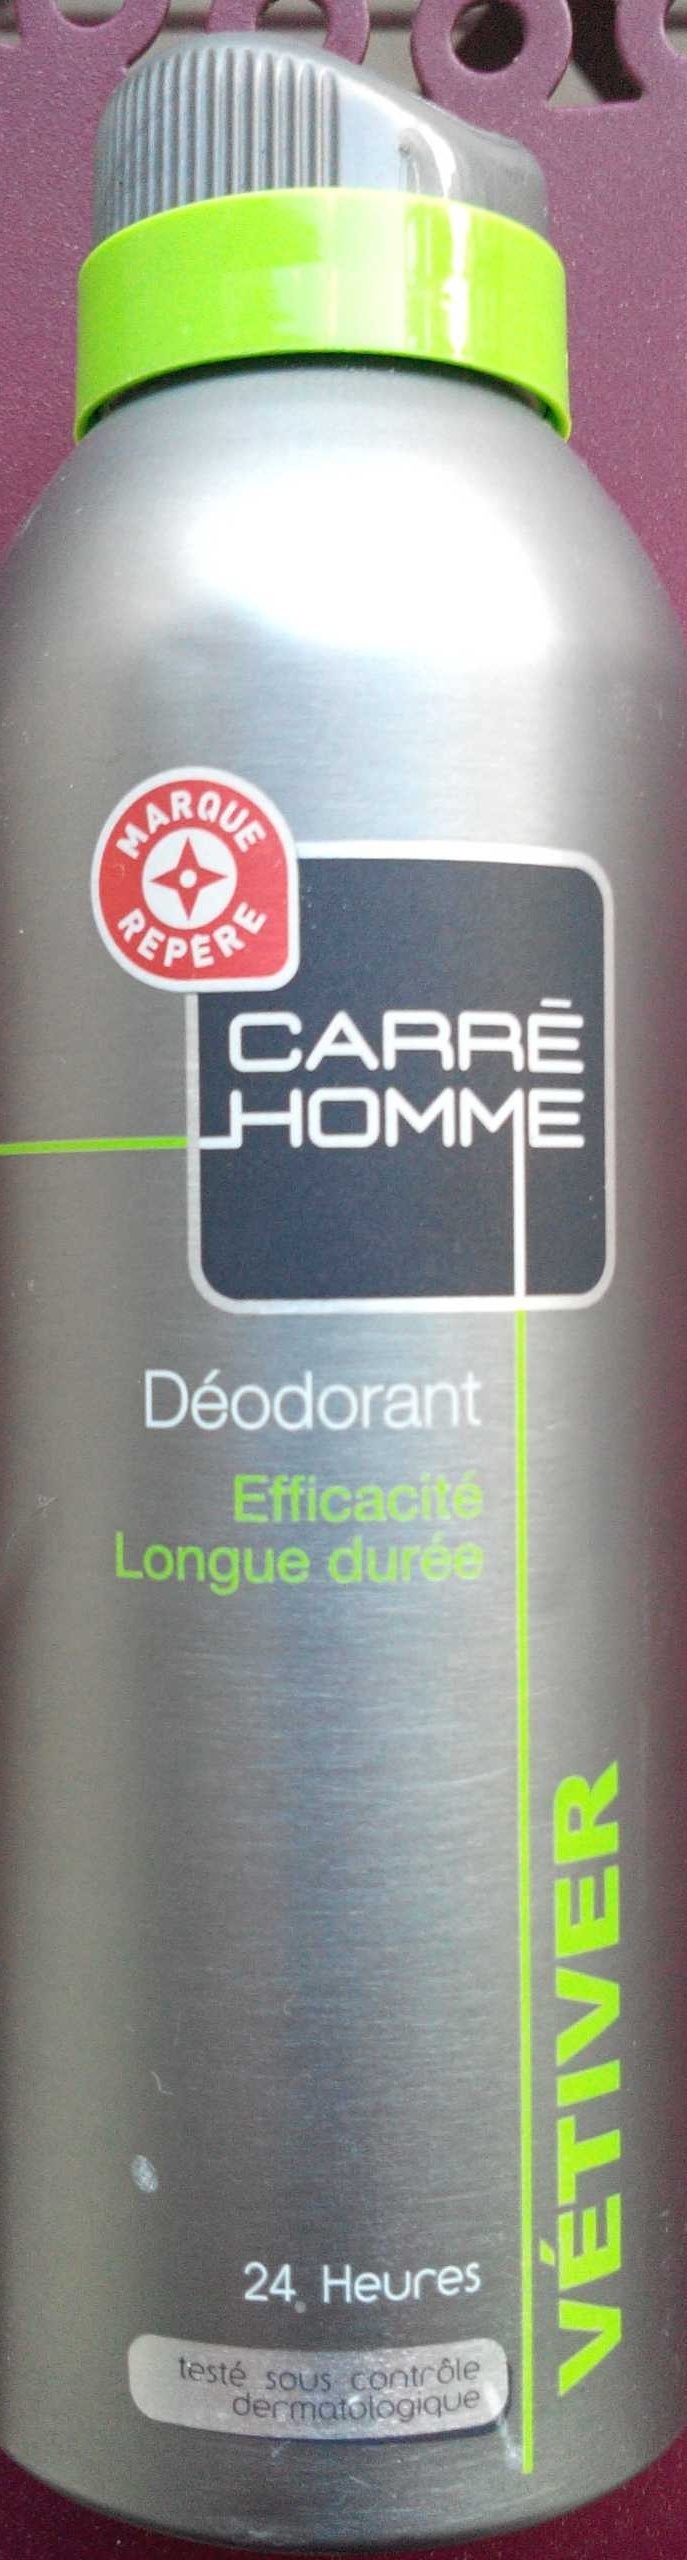 Déodorant Vétiver - Produit - fr